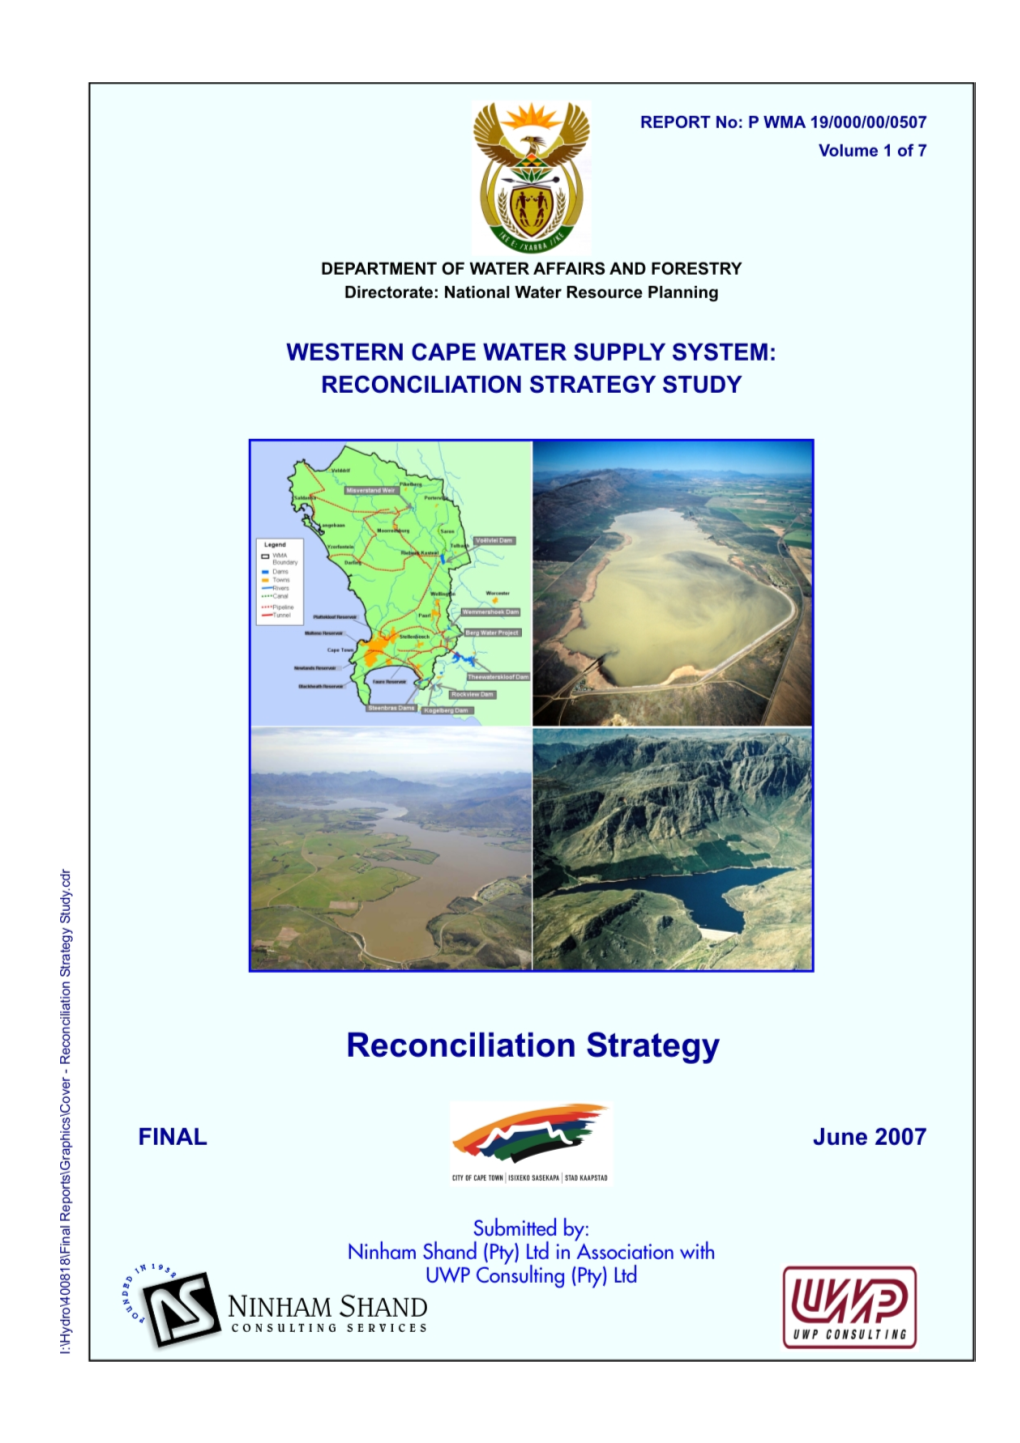 Reconciliation Strategy Study